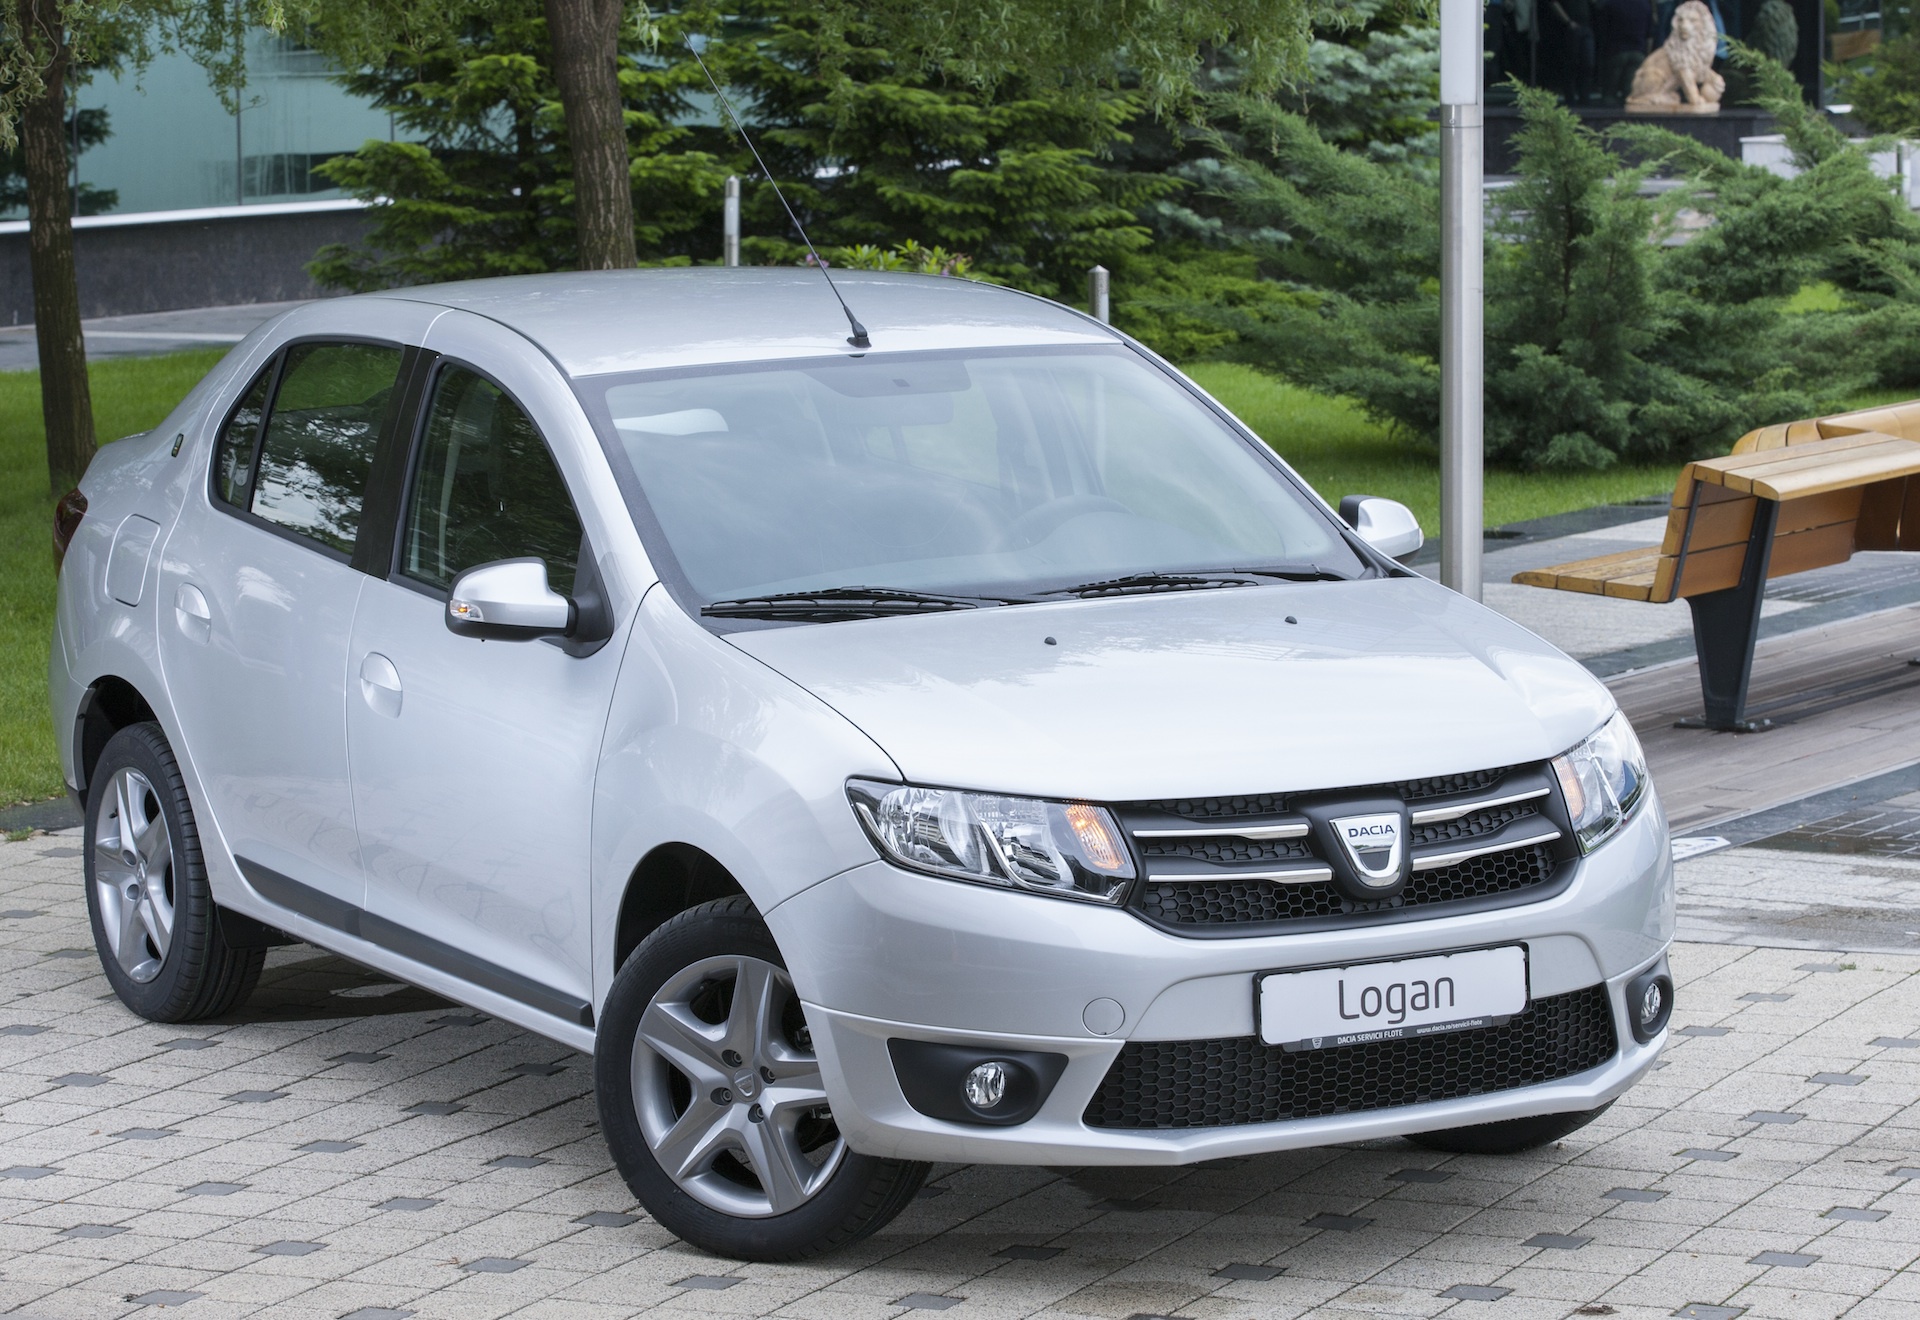 Test Auto ZF: Dacia Logan 1,5 dCi „10 ani”, Logan la standarde Renault